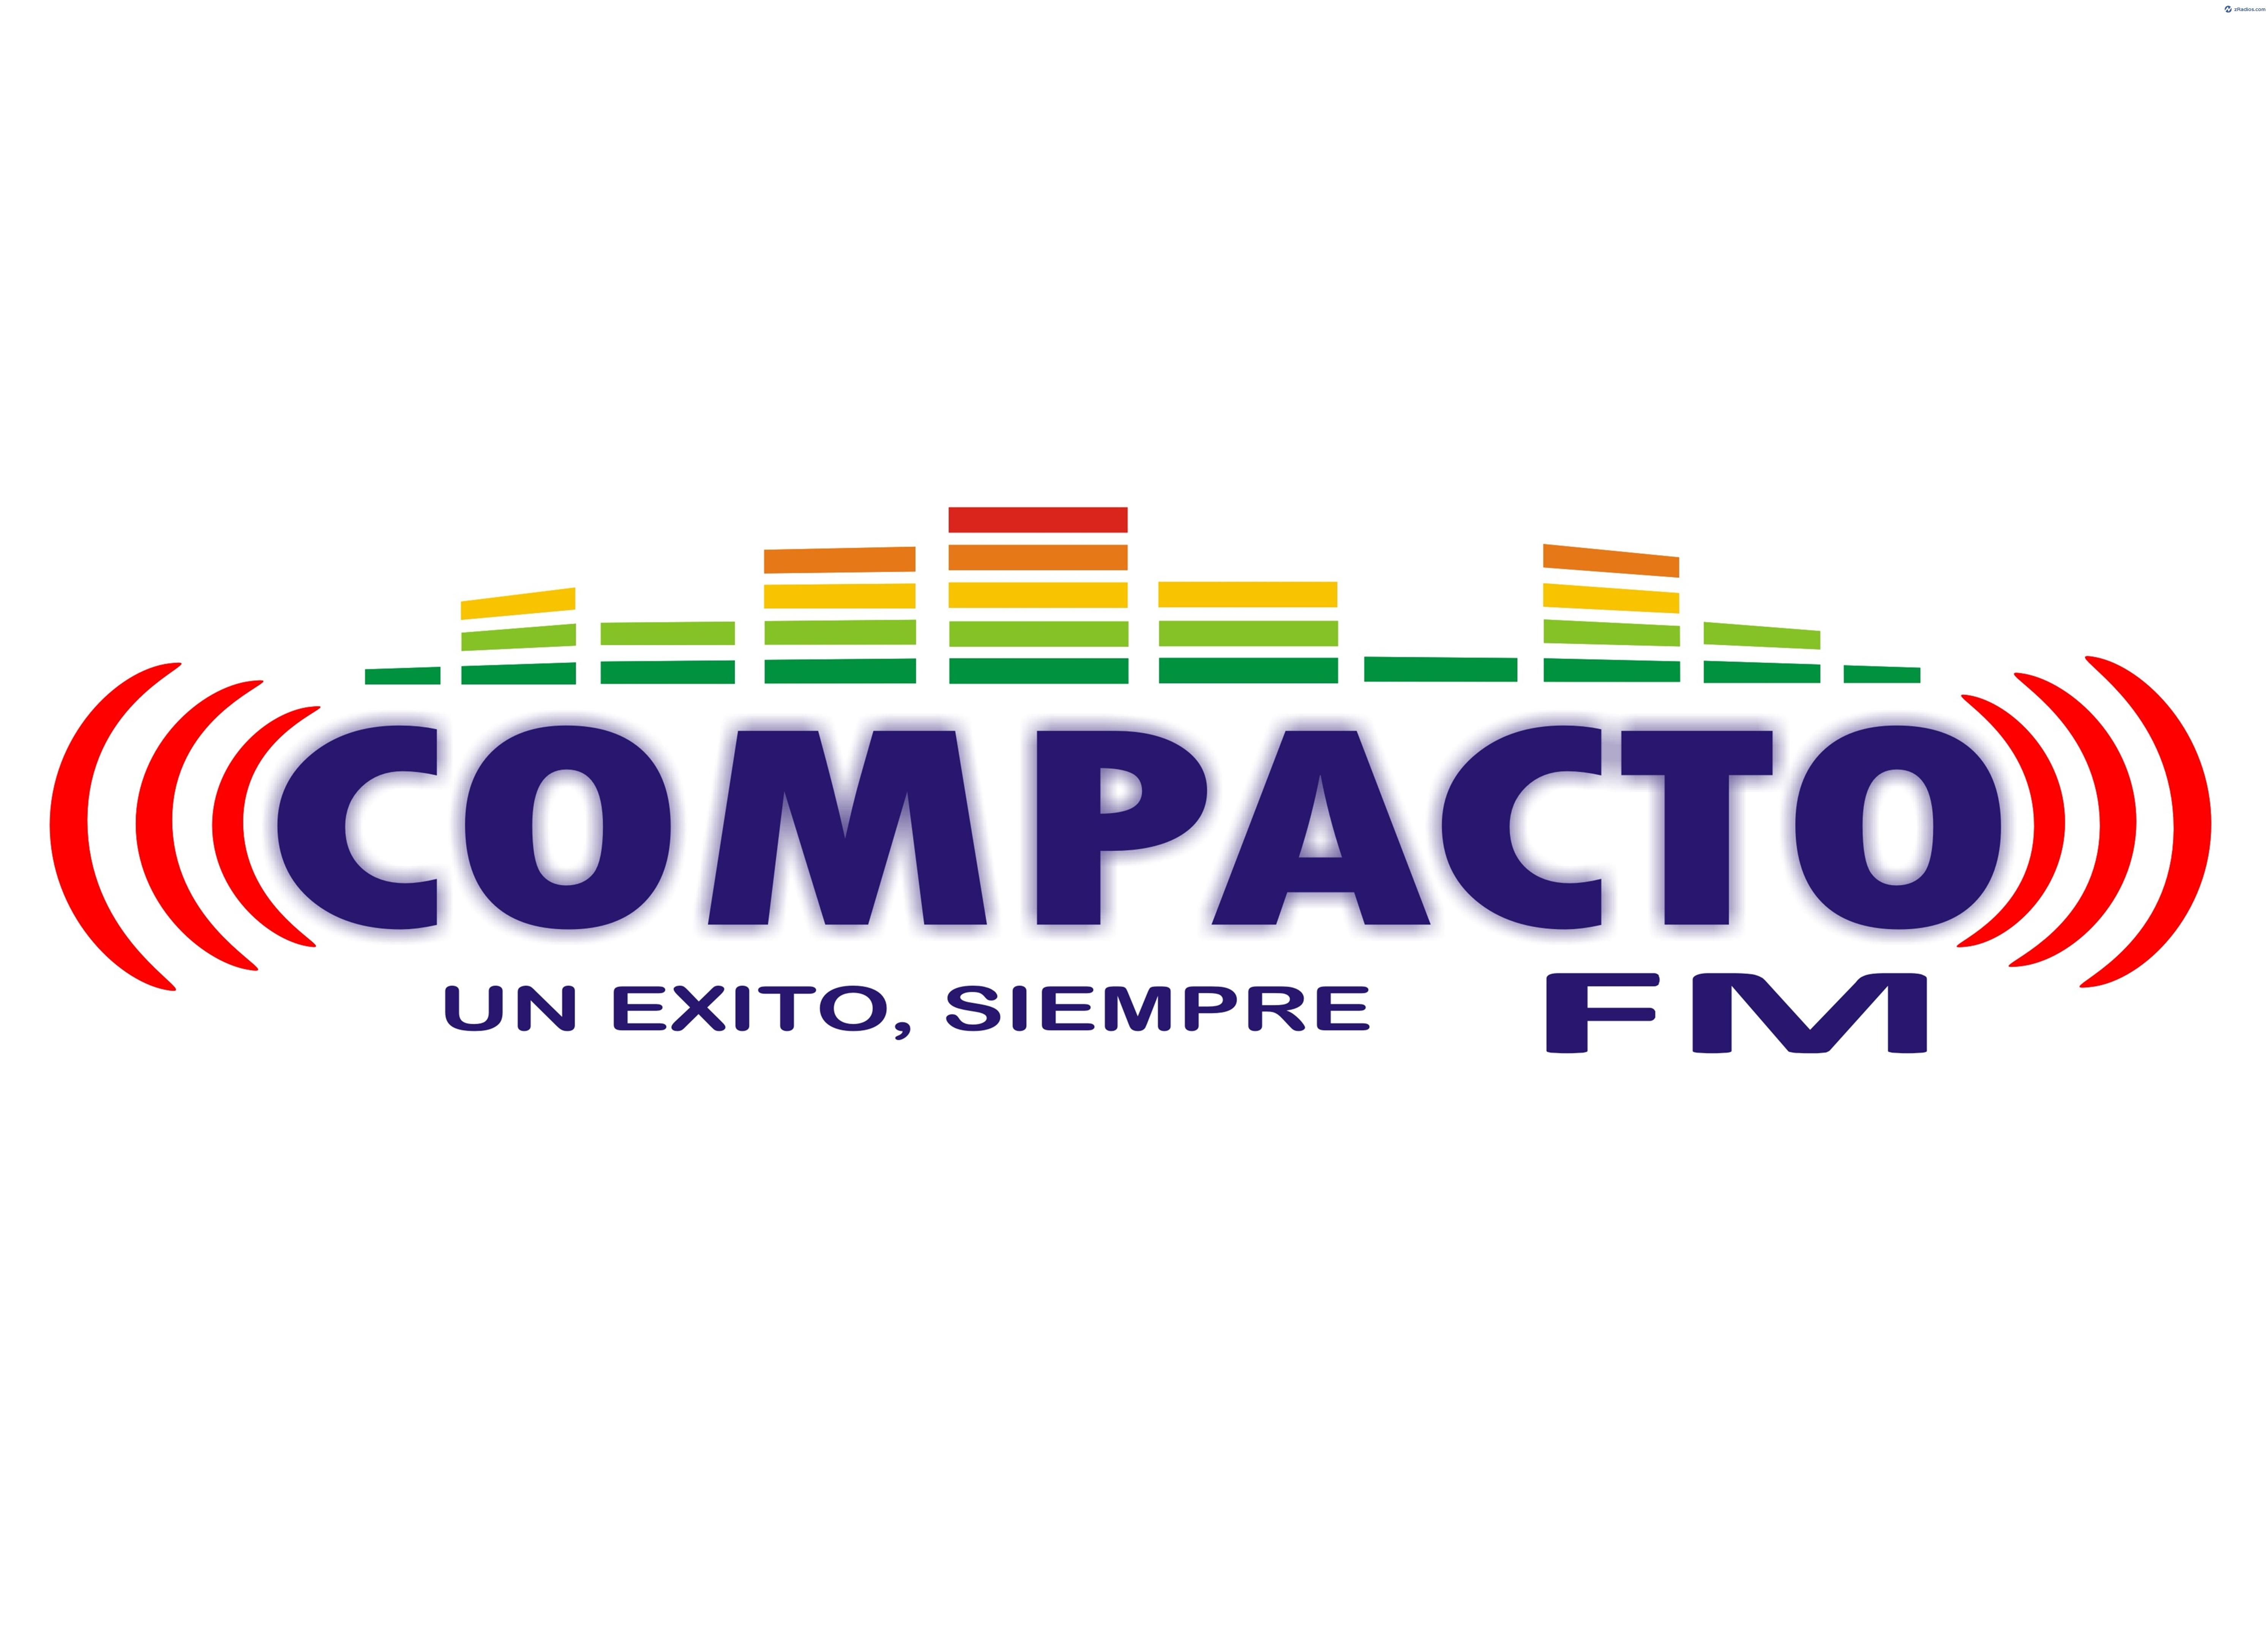 Radio: Compacto FM 92.3